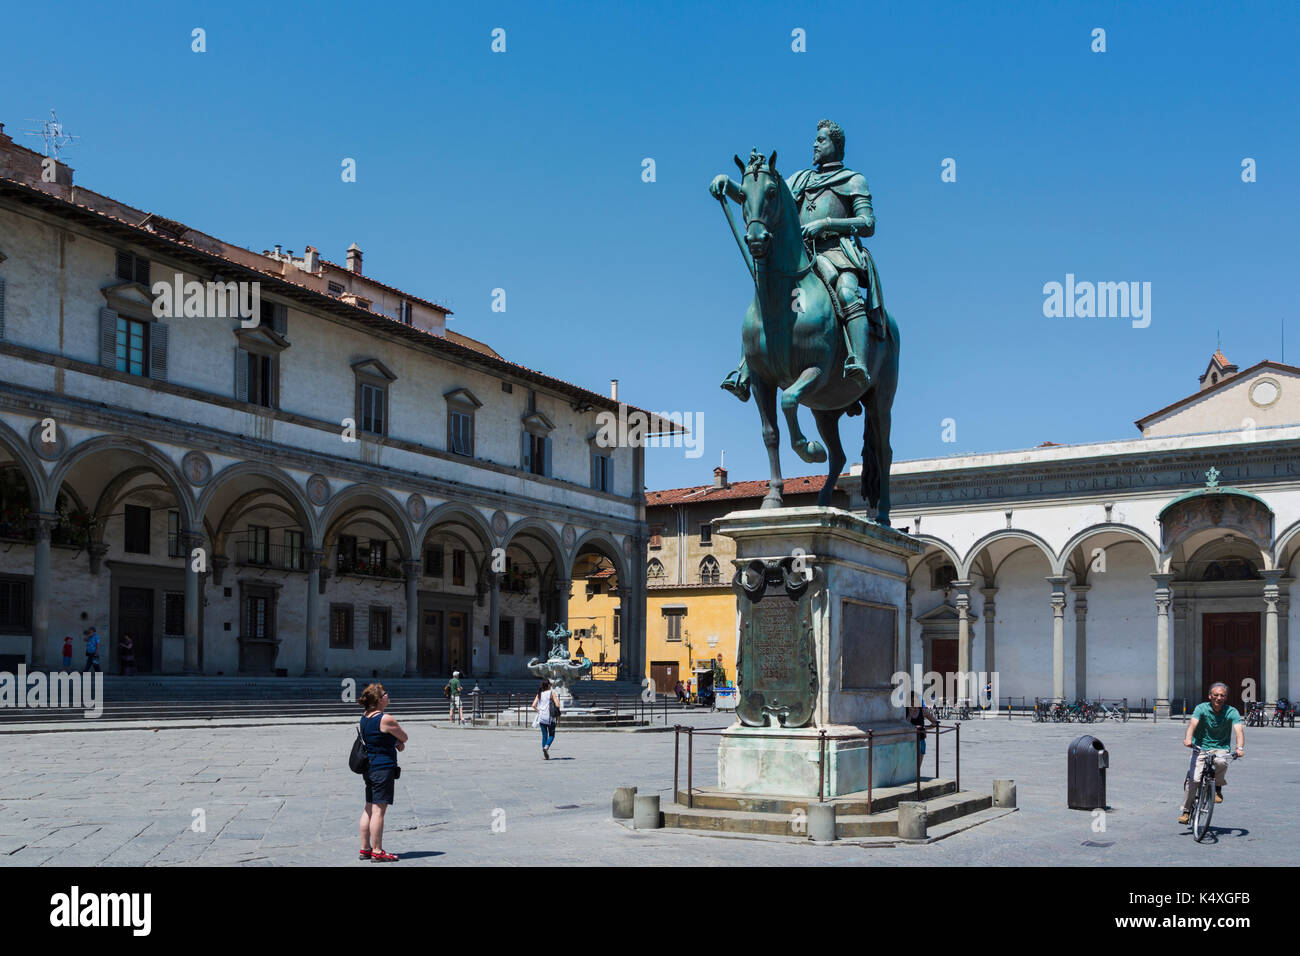 Provinz Florenz, Florenz, Toskana, Italien. Piazza della Santissima Annunziata. Statue von Ferdinando I de' Medici, Großherzog der Toskana, 1549-16. Stockfoto